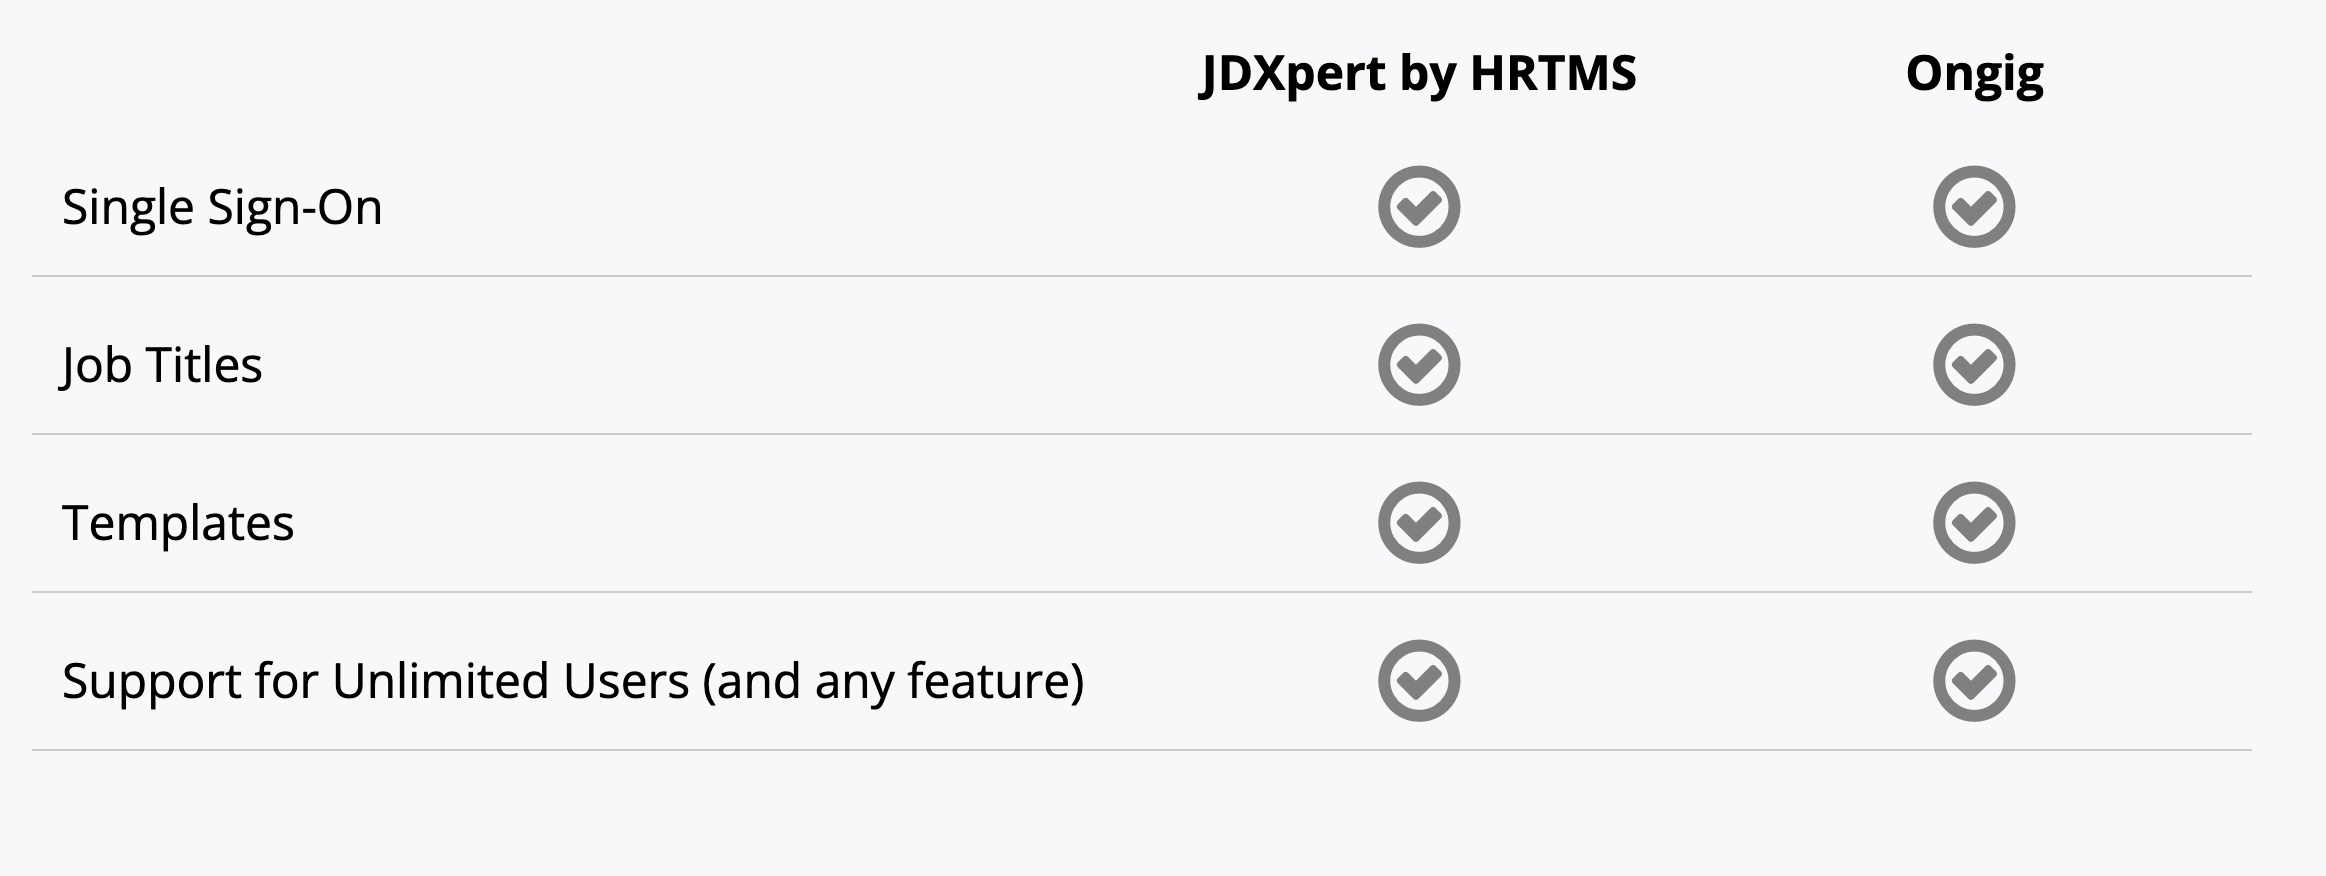 jdxpert-ongig-comparison